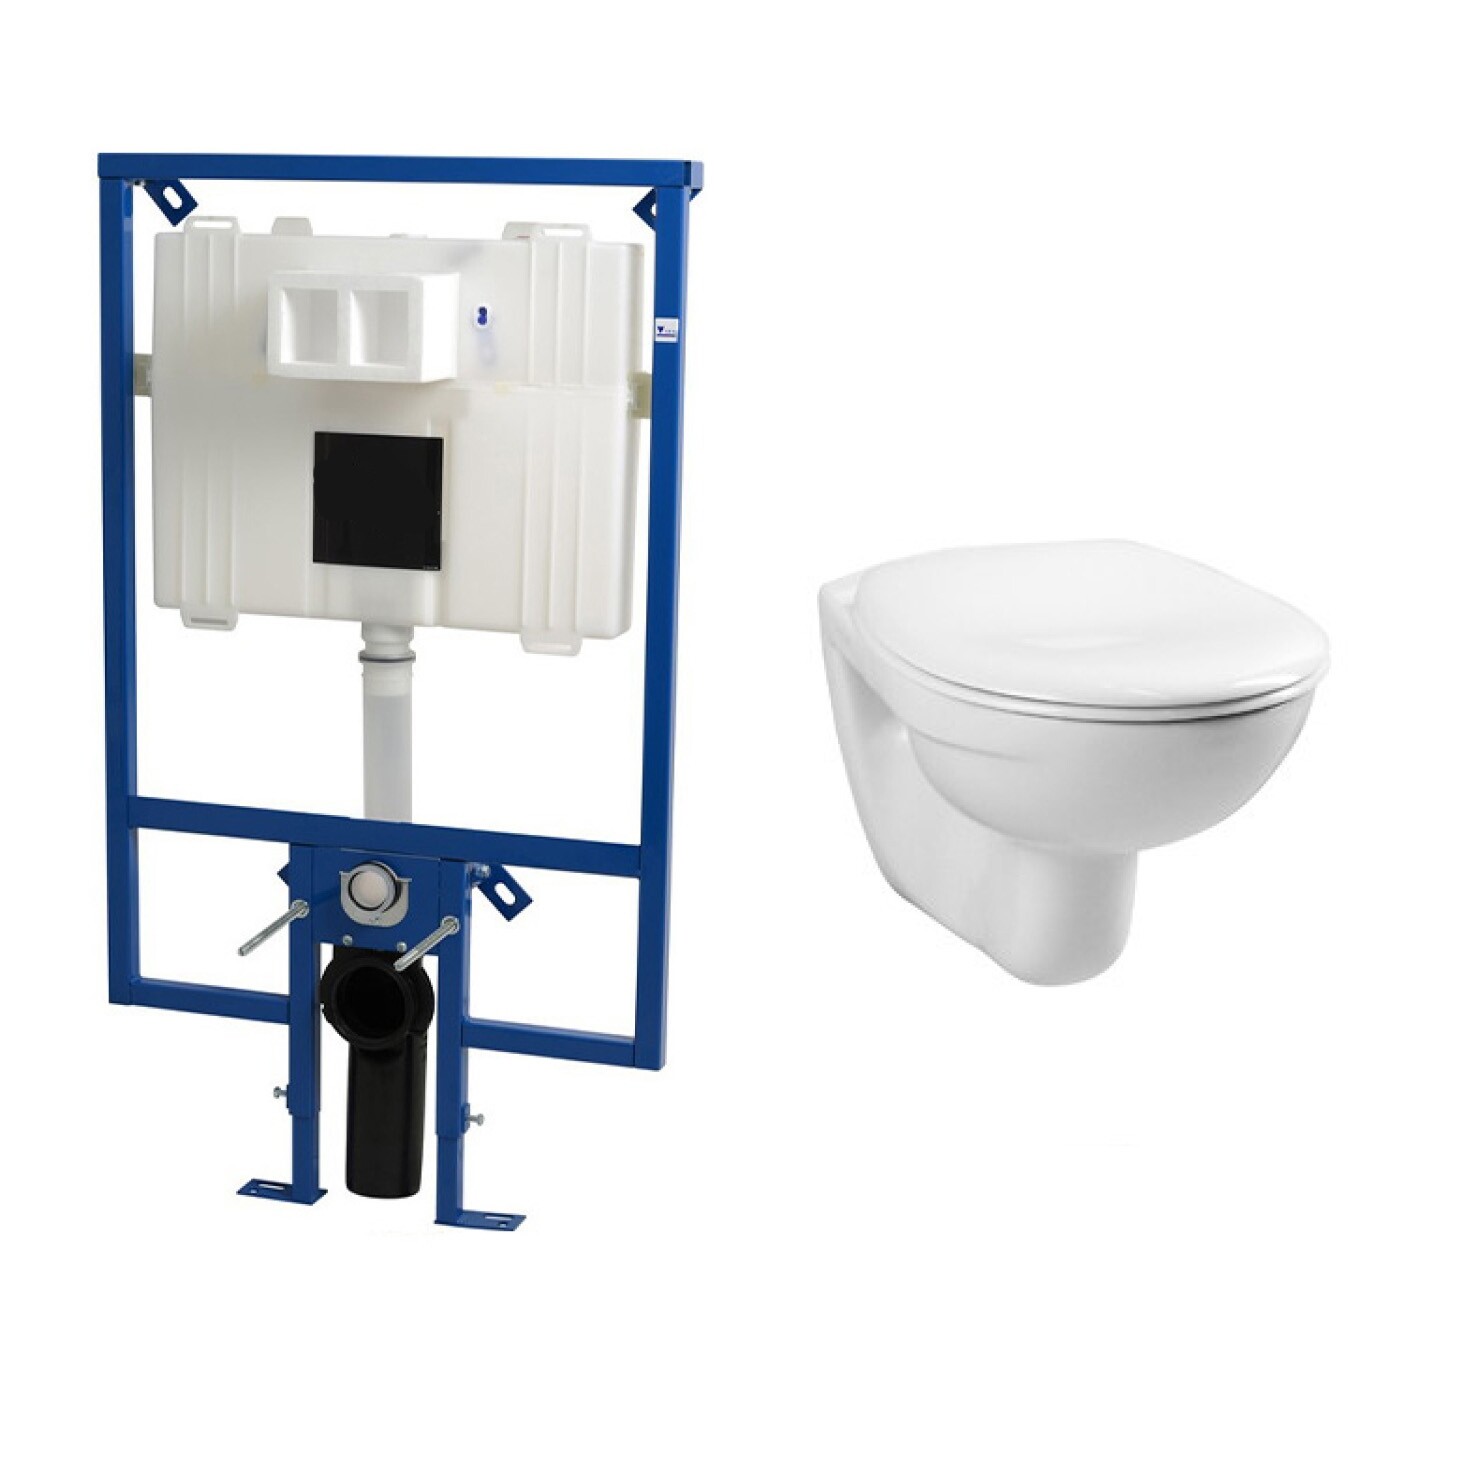 Elementair Grand serie Plieger Flair Compact toiletset met Plieger Basic toilet en standaard  zitting - SK31873